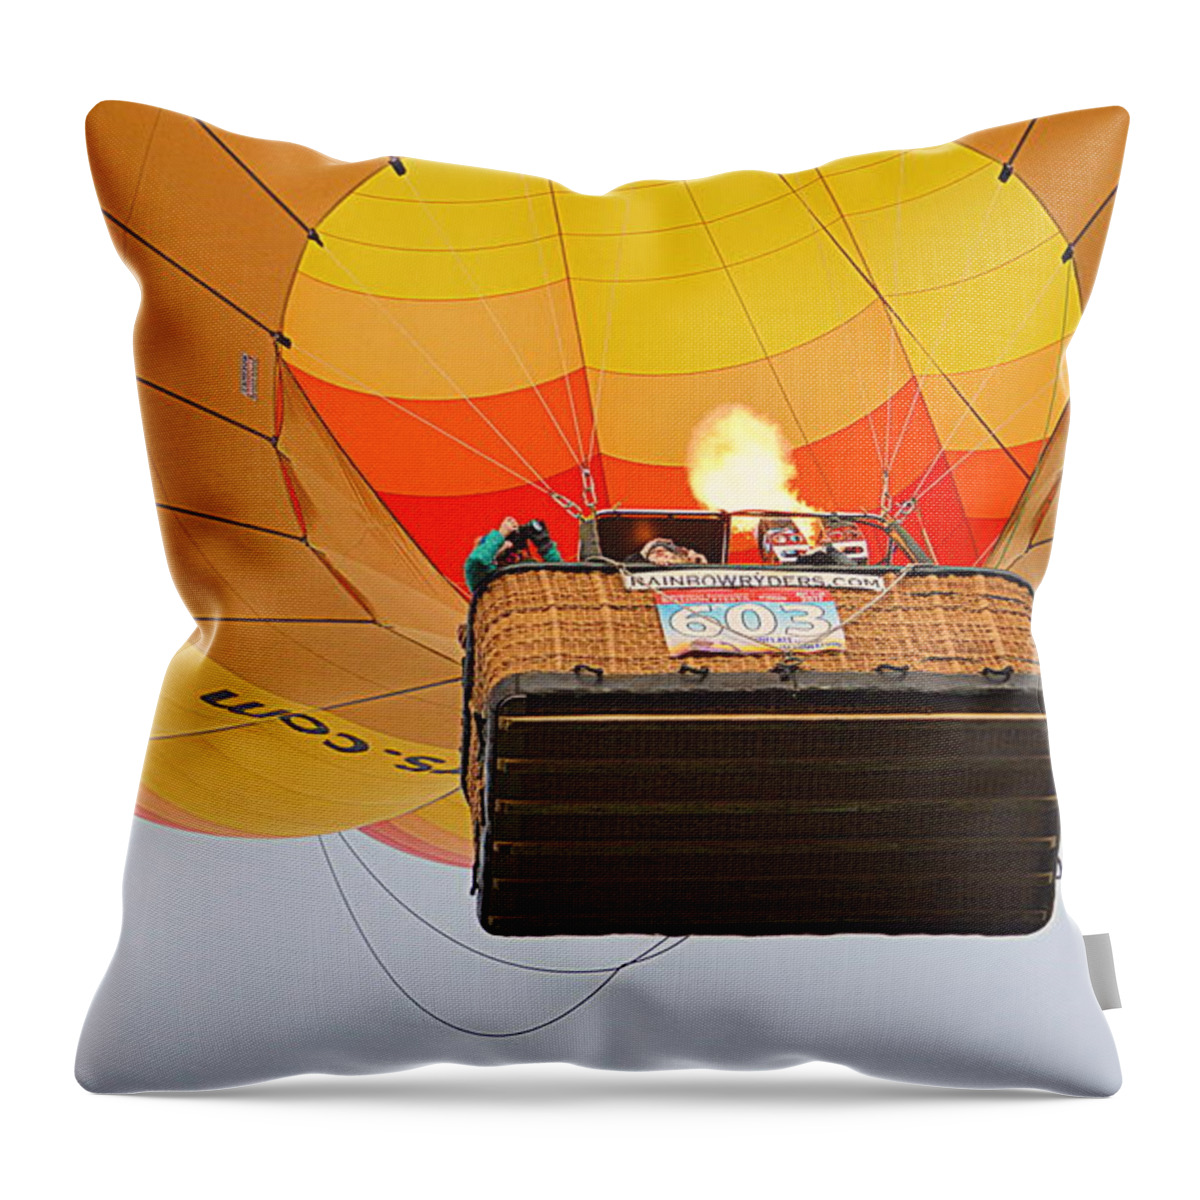 Hot Air Balloon Throw Pillow featuring the photograph Liftoff by AJ Schibig